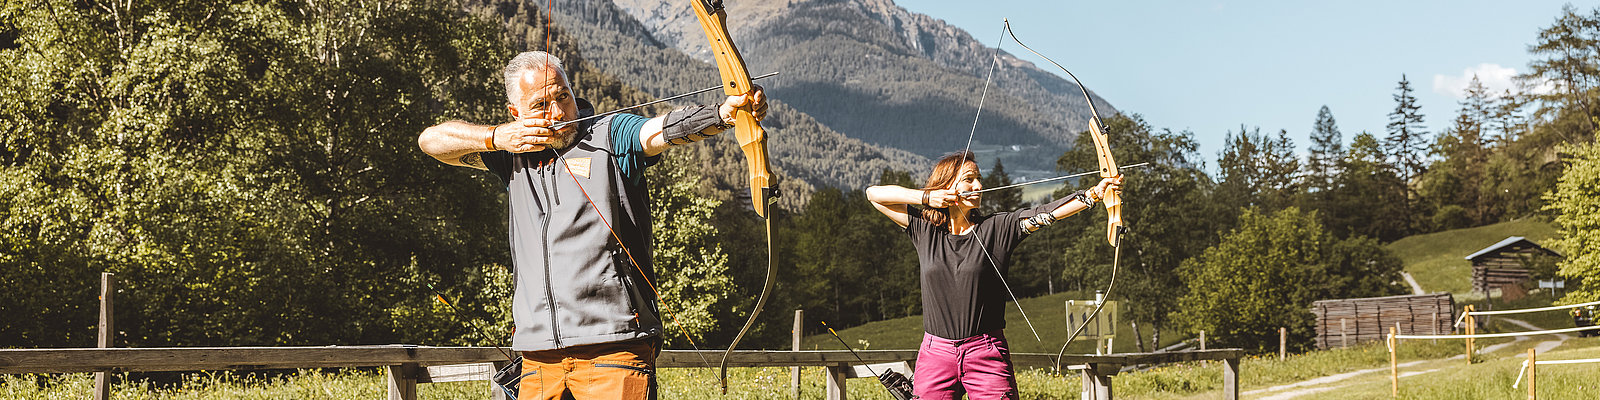 Bogenschießen | © TVB Tiroler Oberland / Roman Huber